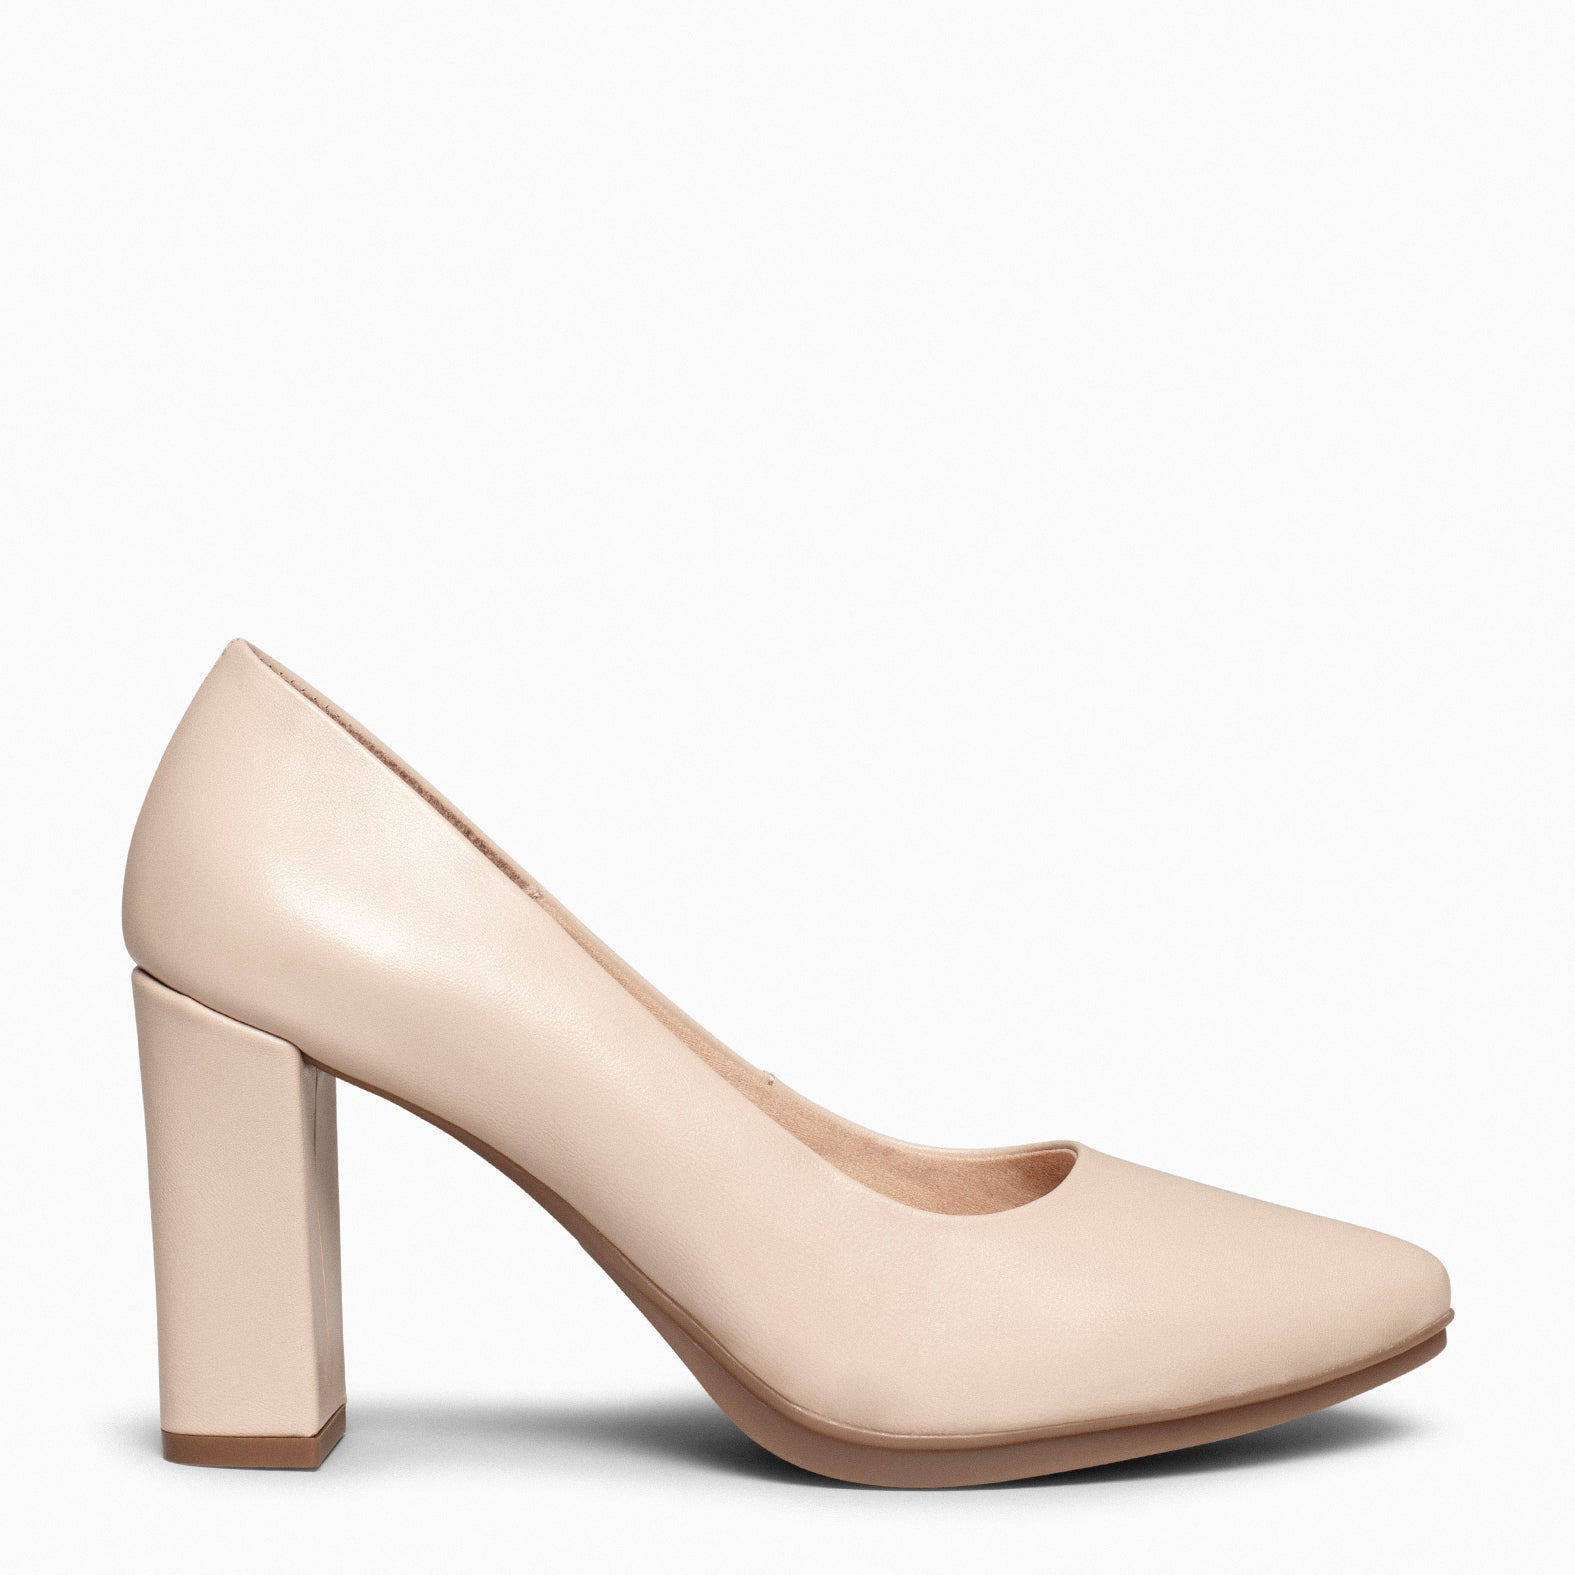 URBAN SALON –  BEIGE nappa leather high heel